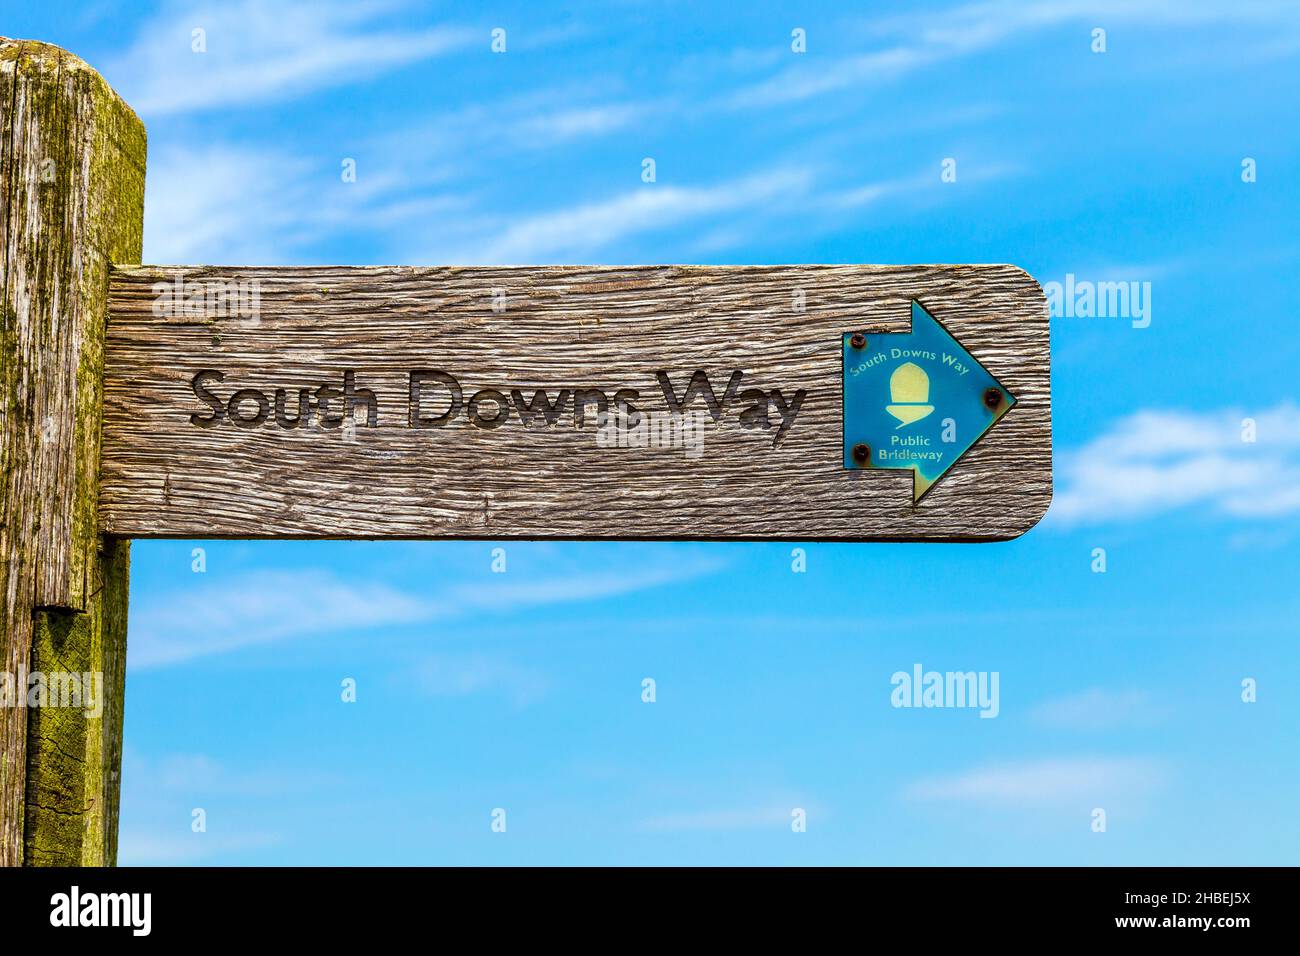 Wandern in den South Downs, South Downs Way Holz- Hinweisschild, Großbritannien Stockfoto